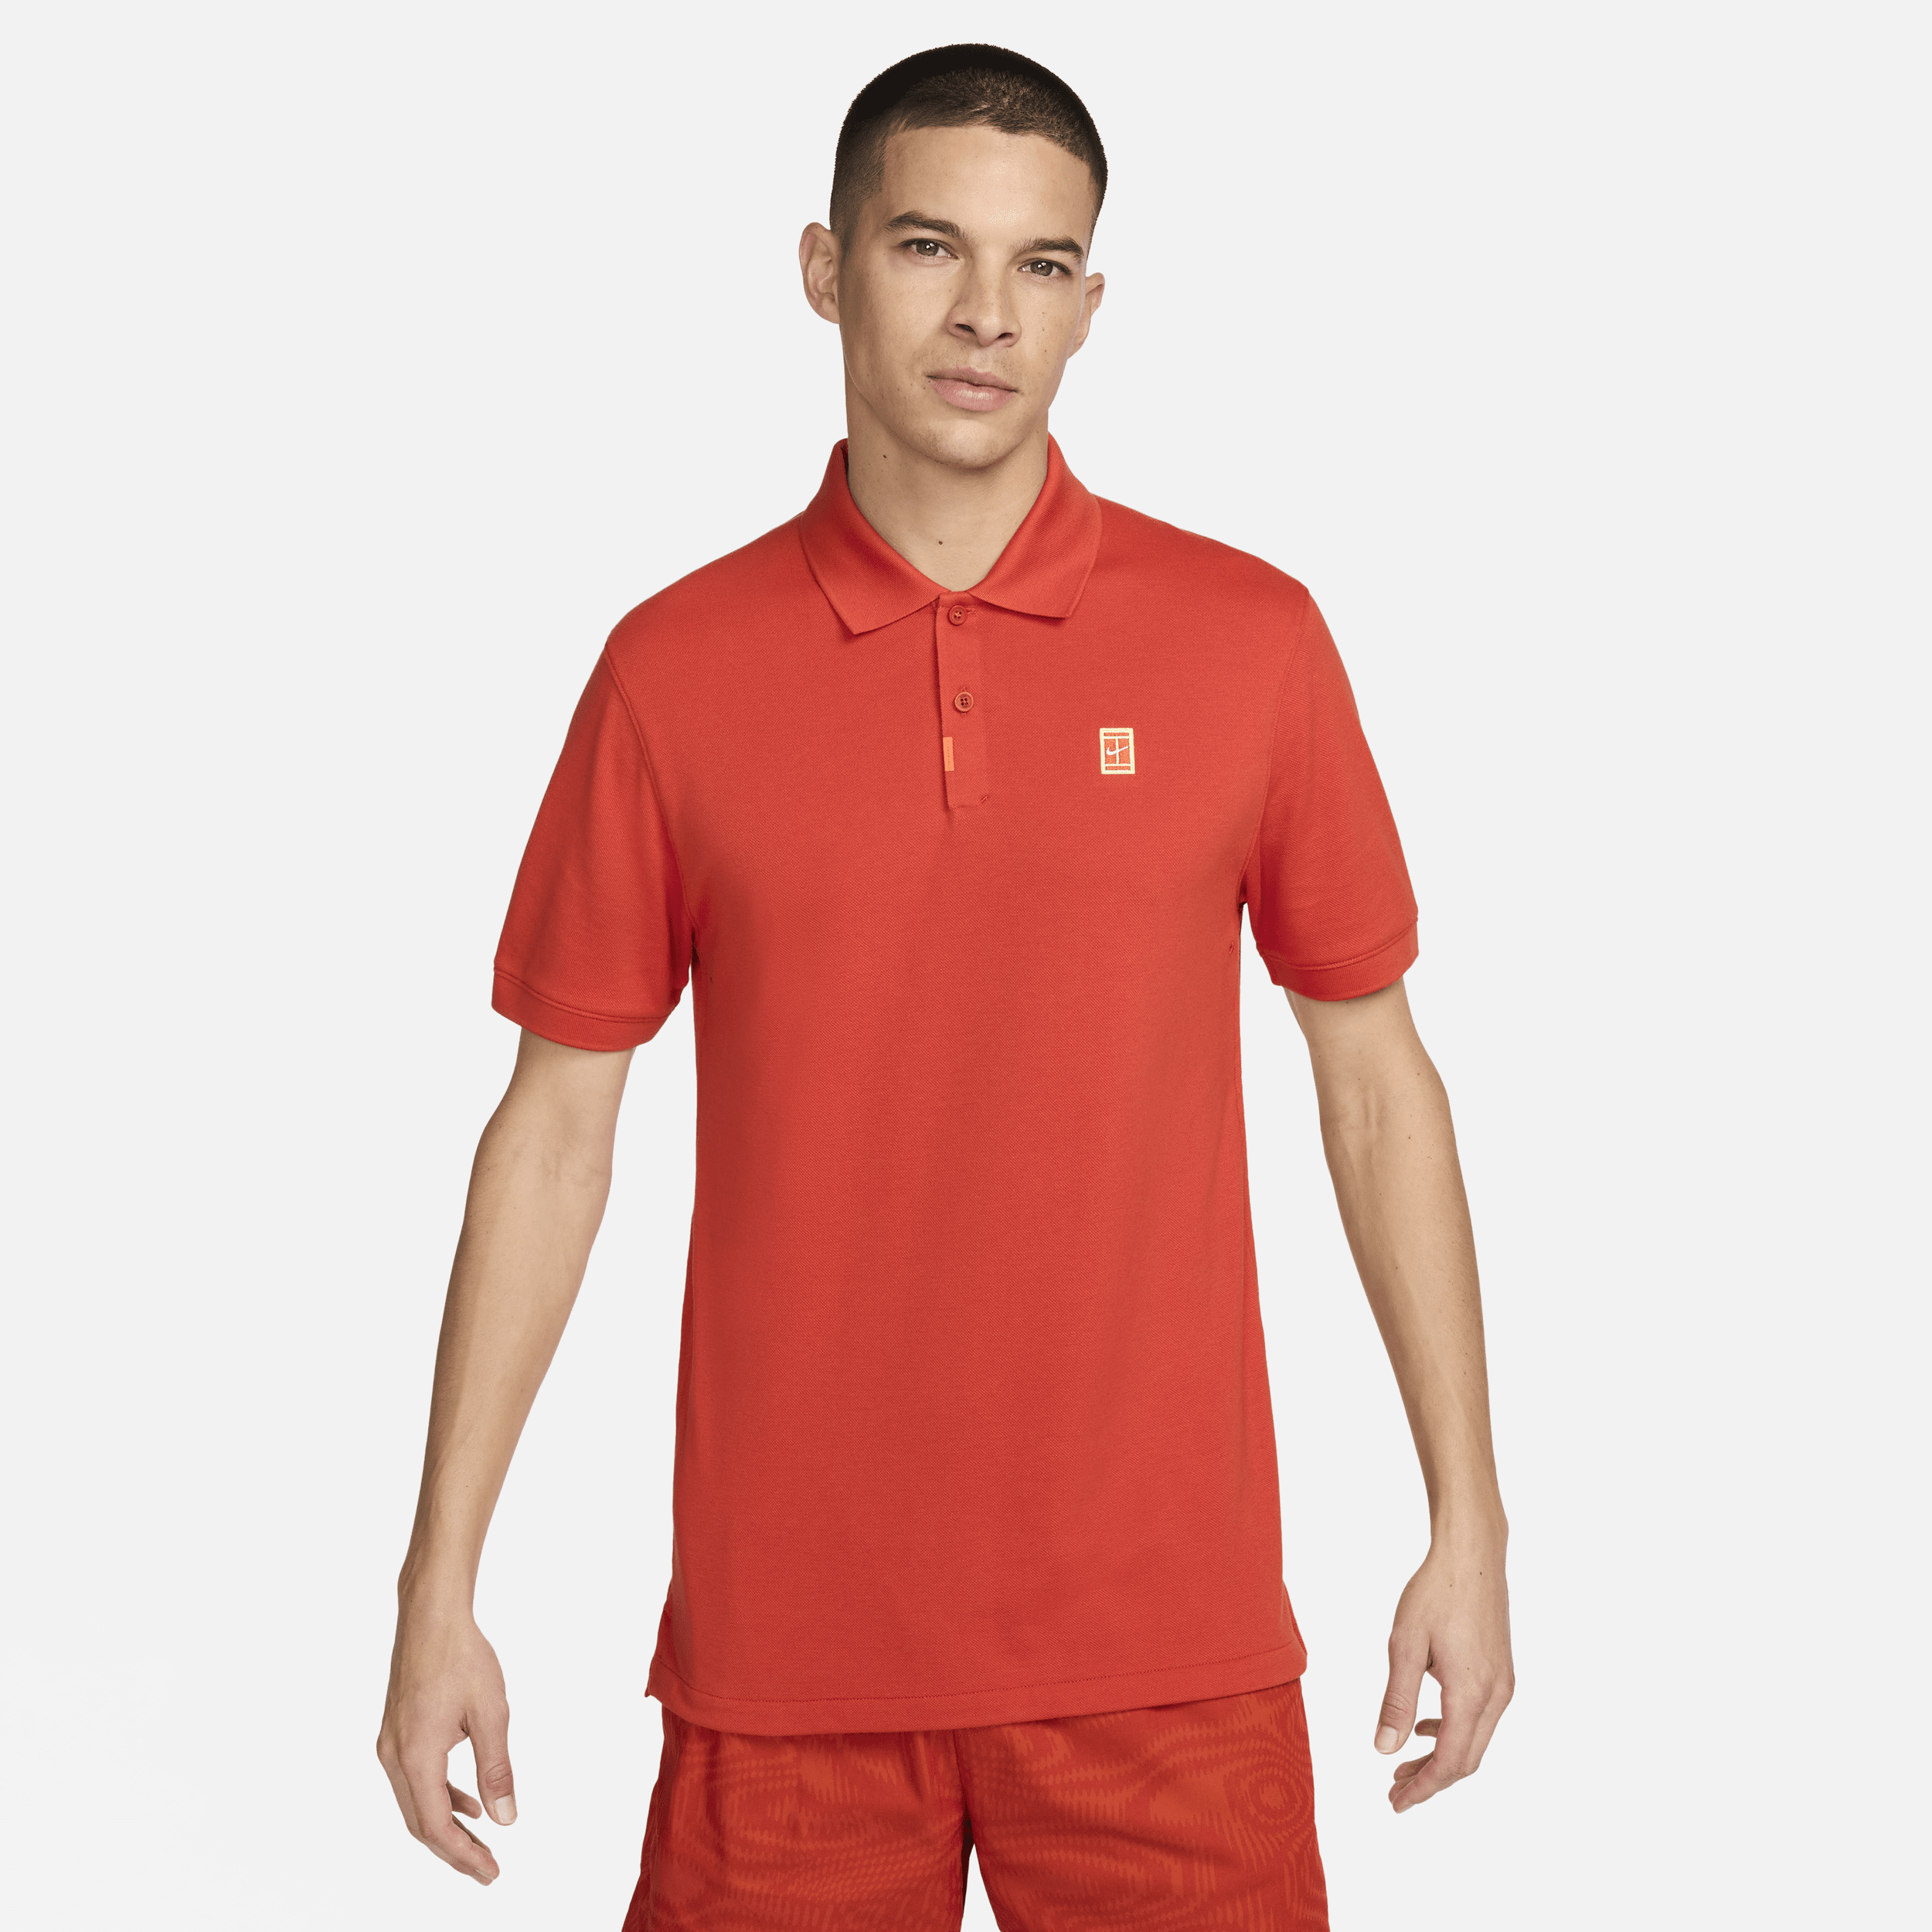 Polo Slim Fit The Nike Polo – Uomo - Arancione